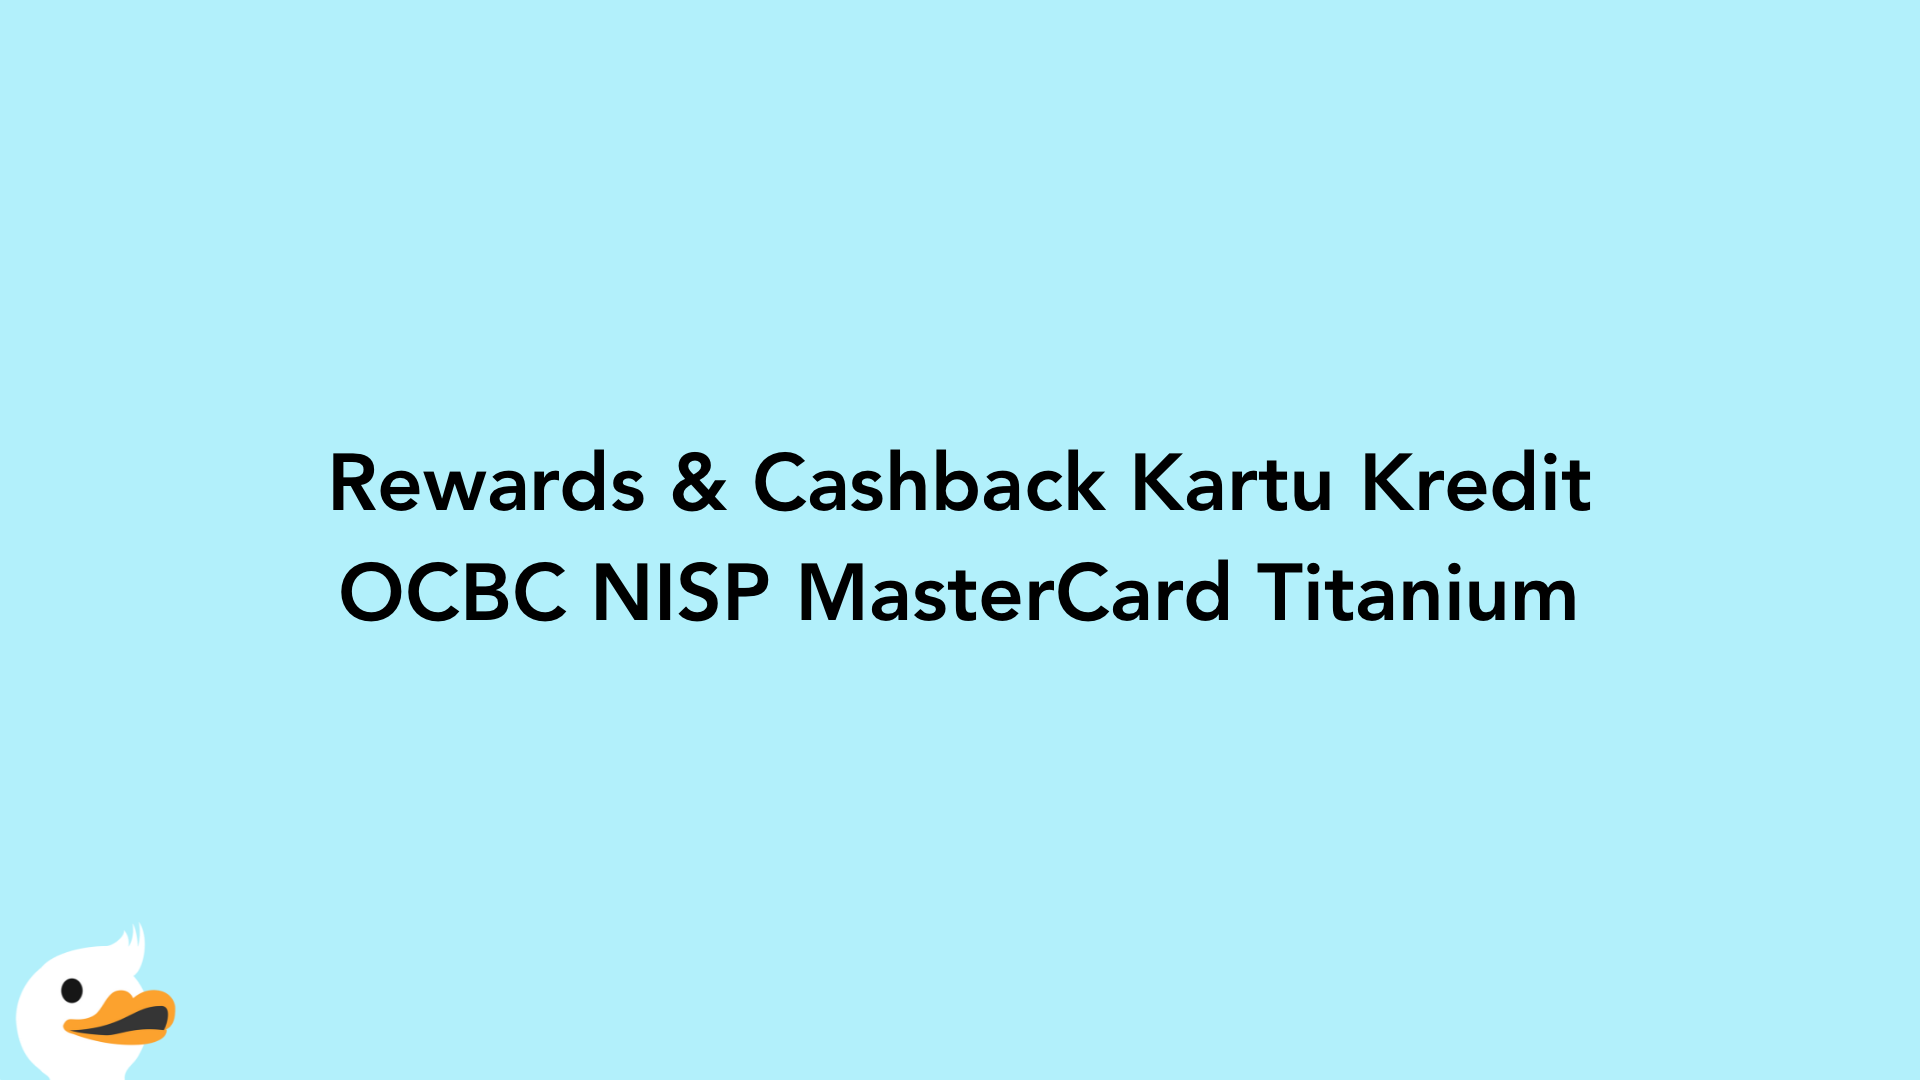 Rewards & Cashback Kartu Kredit OCBC NISP MasterCard Titanium